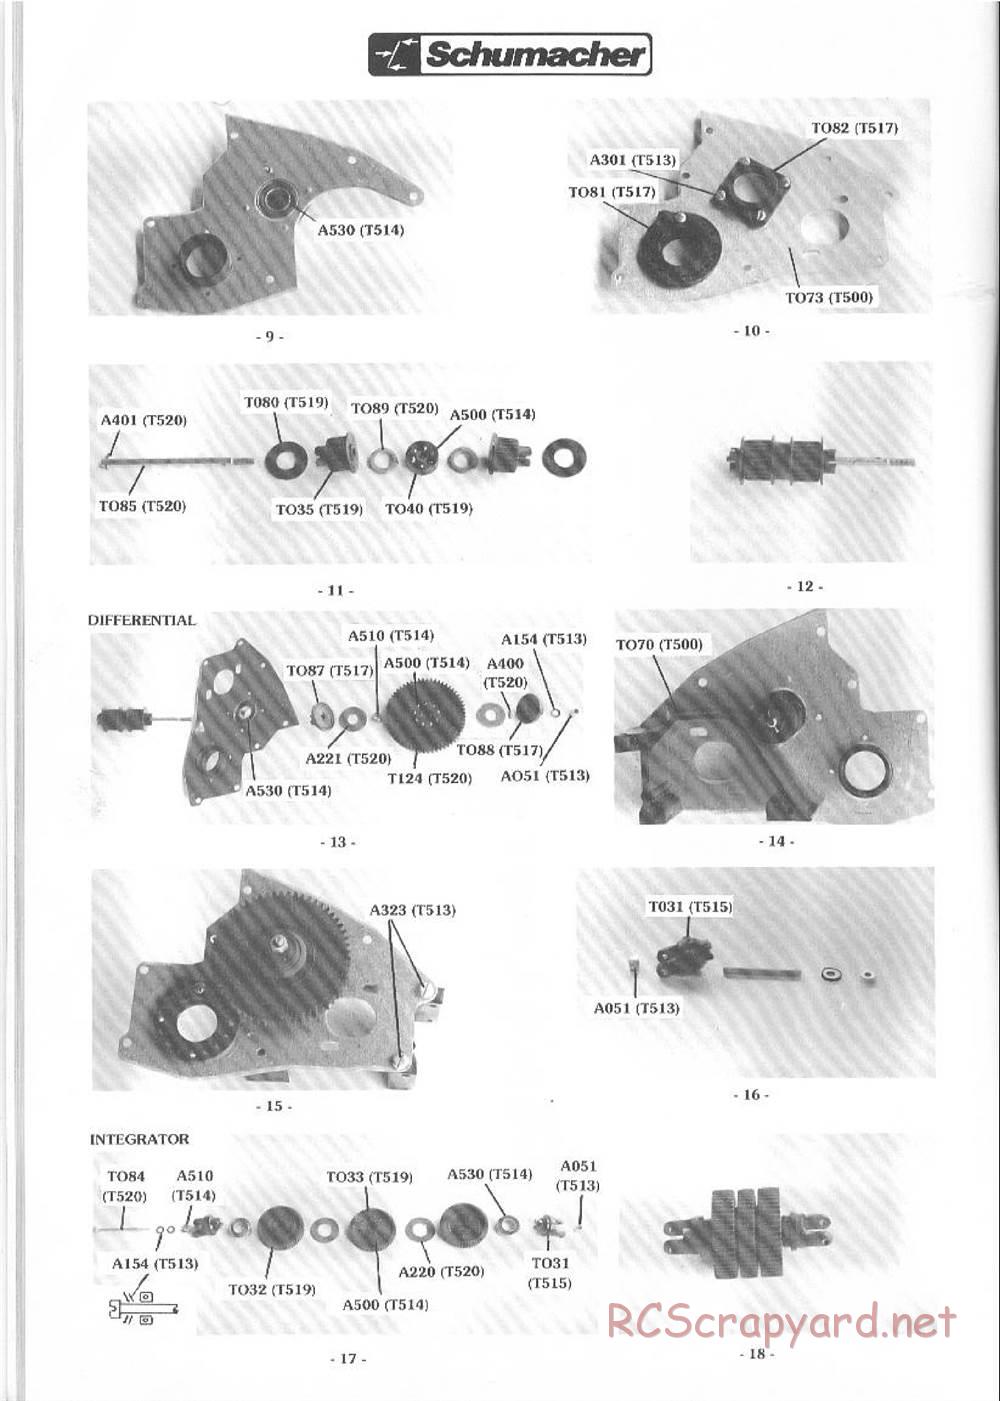 Schumacher - Cat SWB - Manual - Page 7